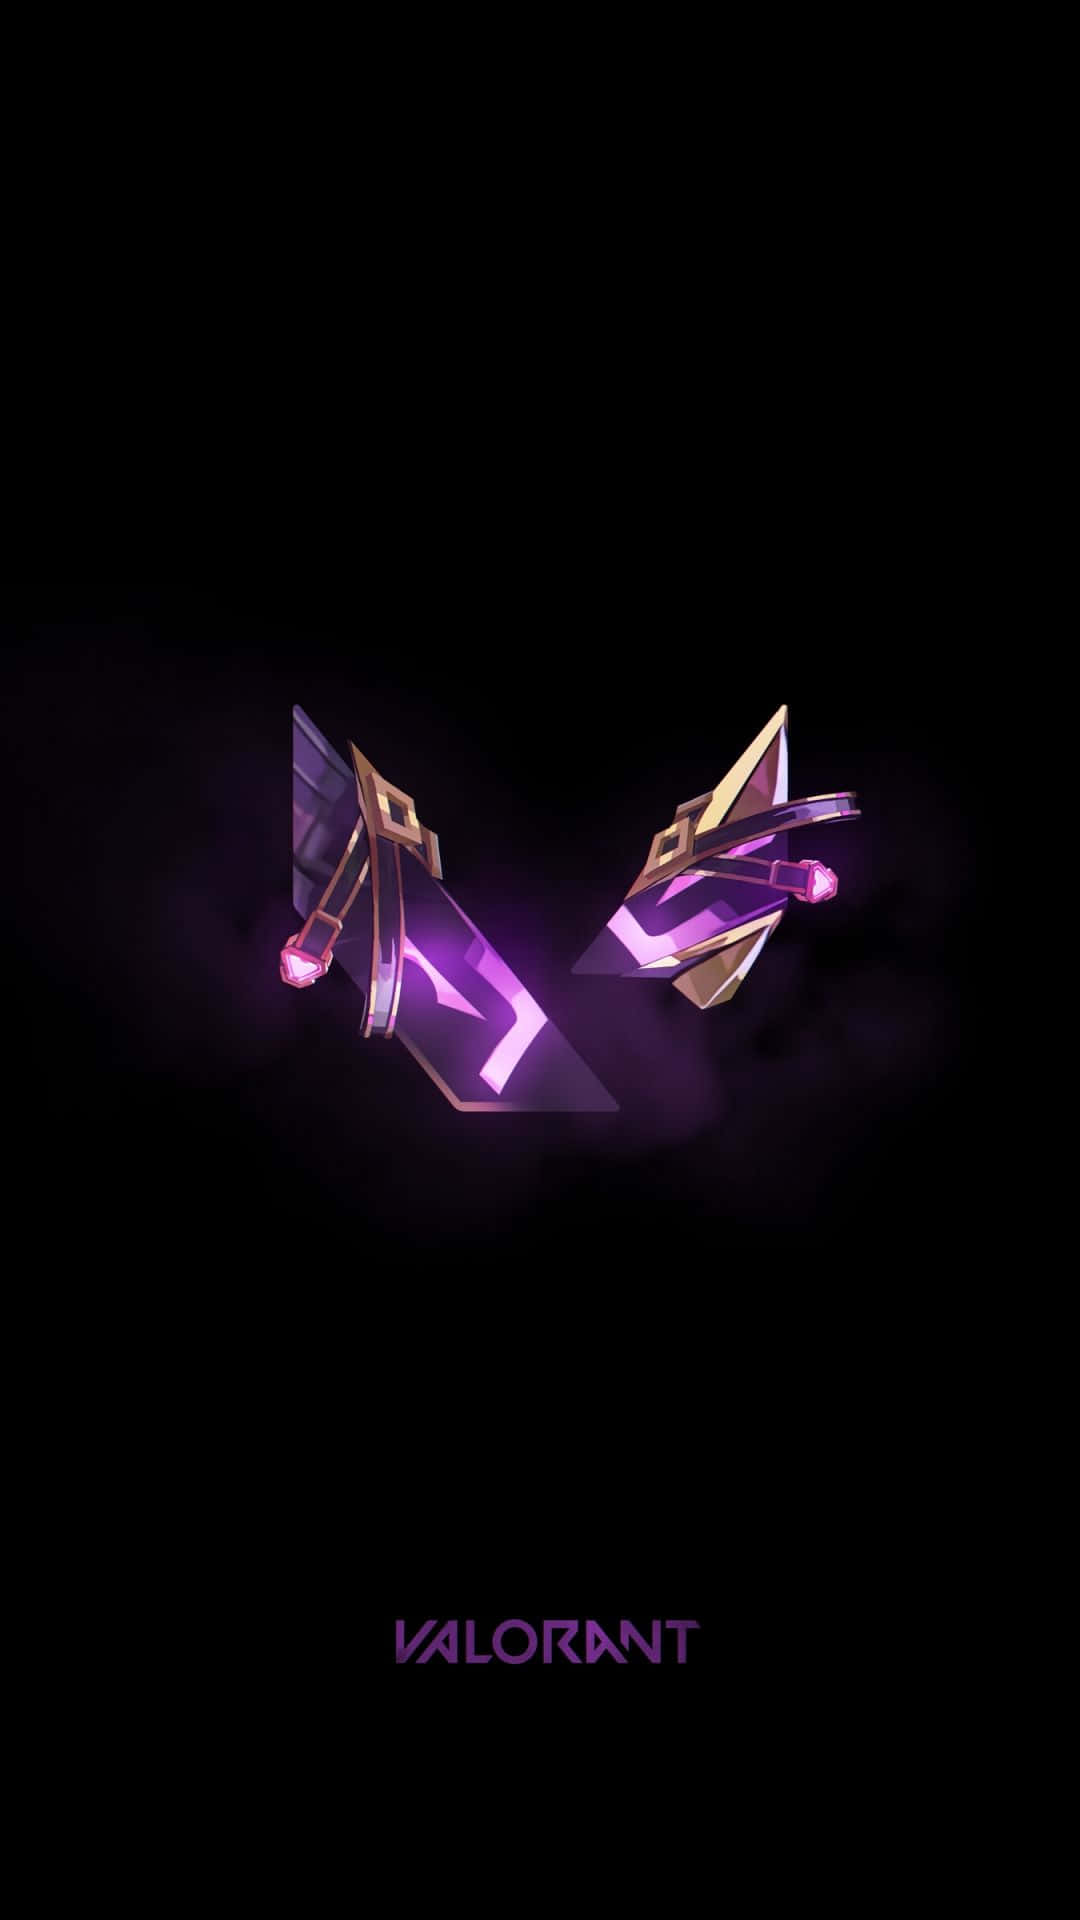 Iphonexs Bakgrundsbild Med Valorant Purple Reyna Emblem